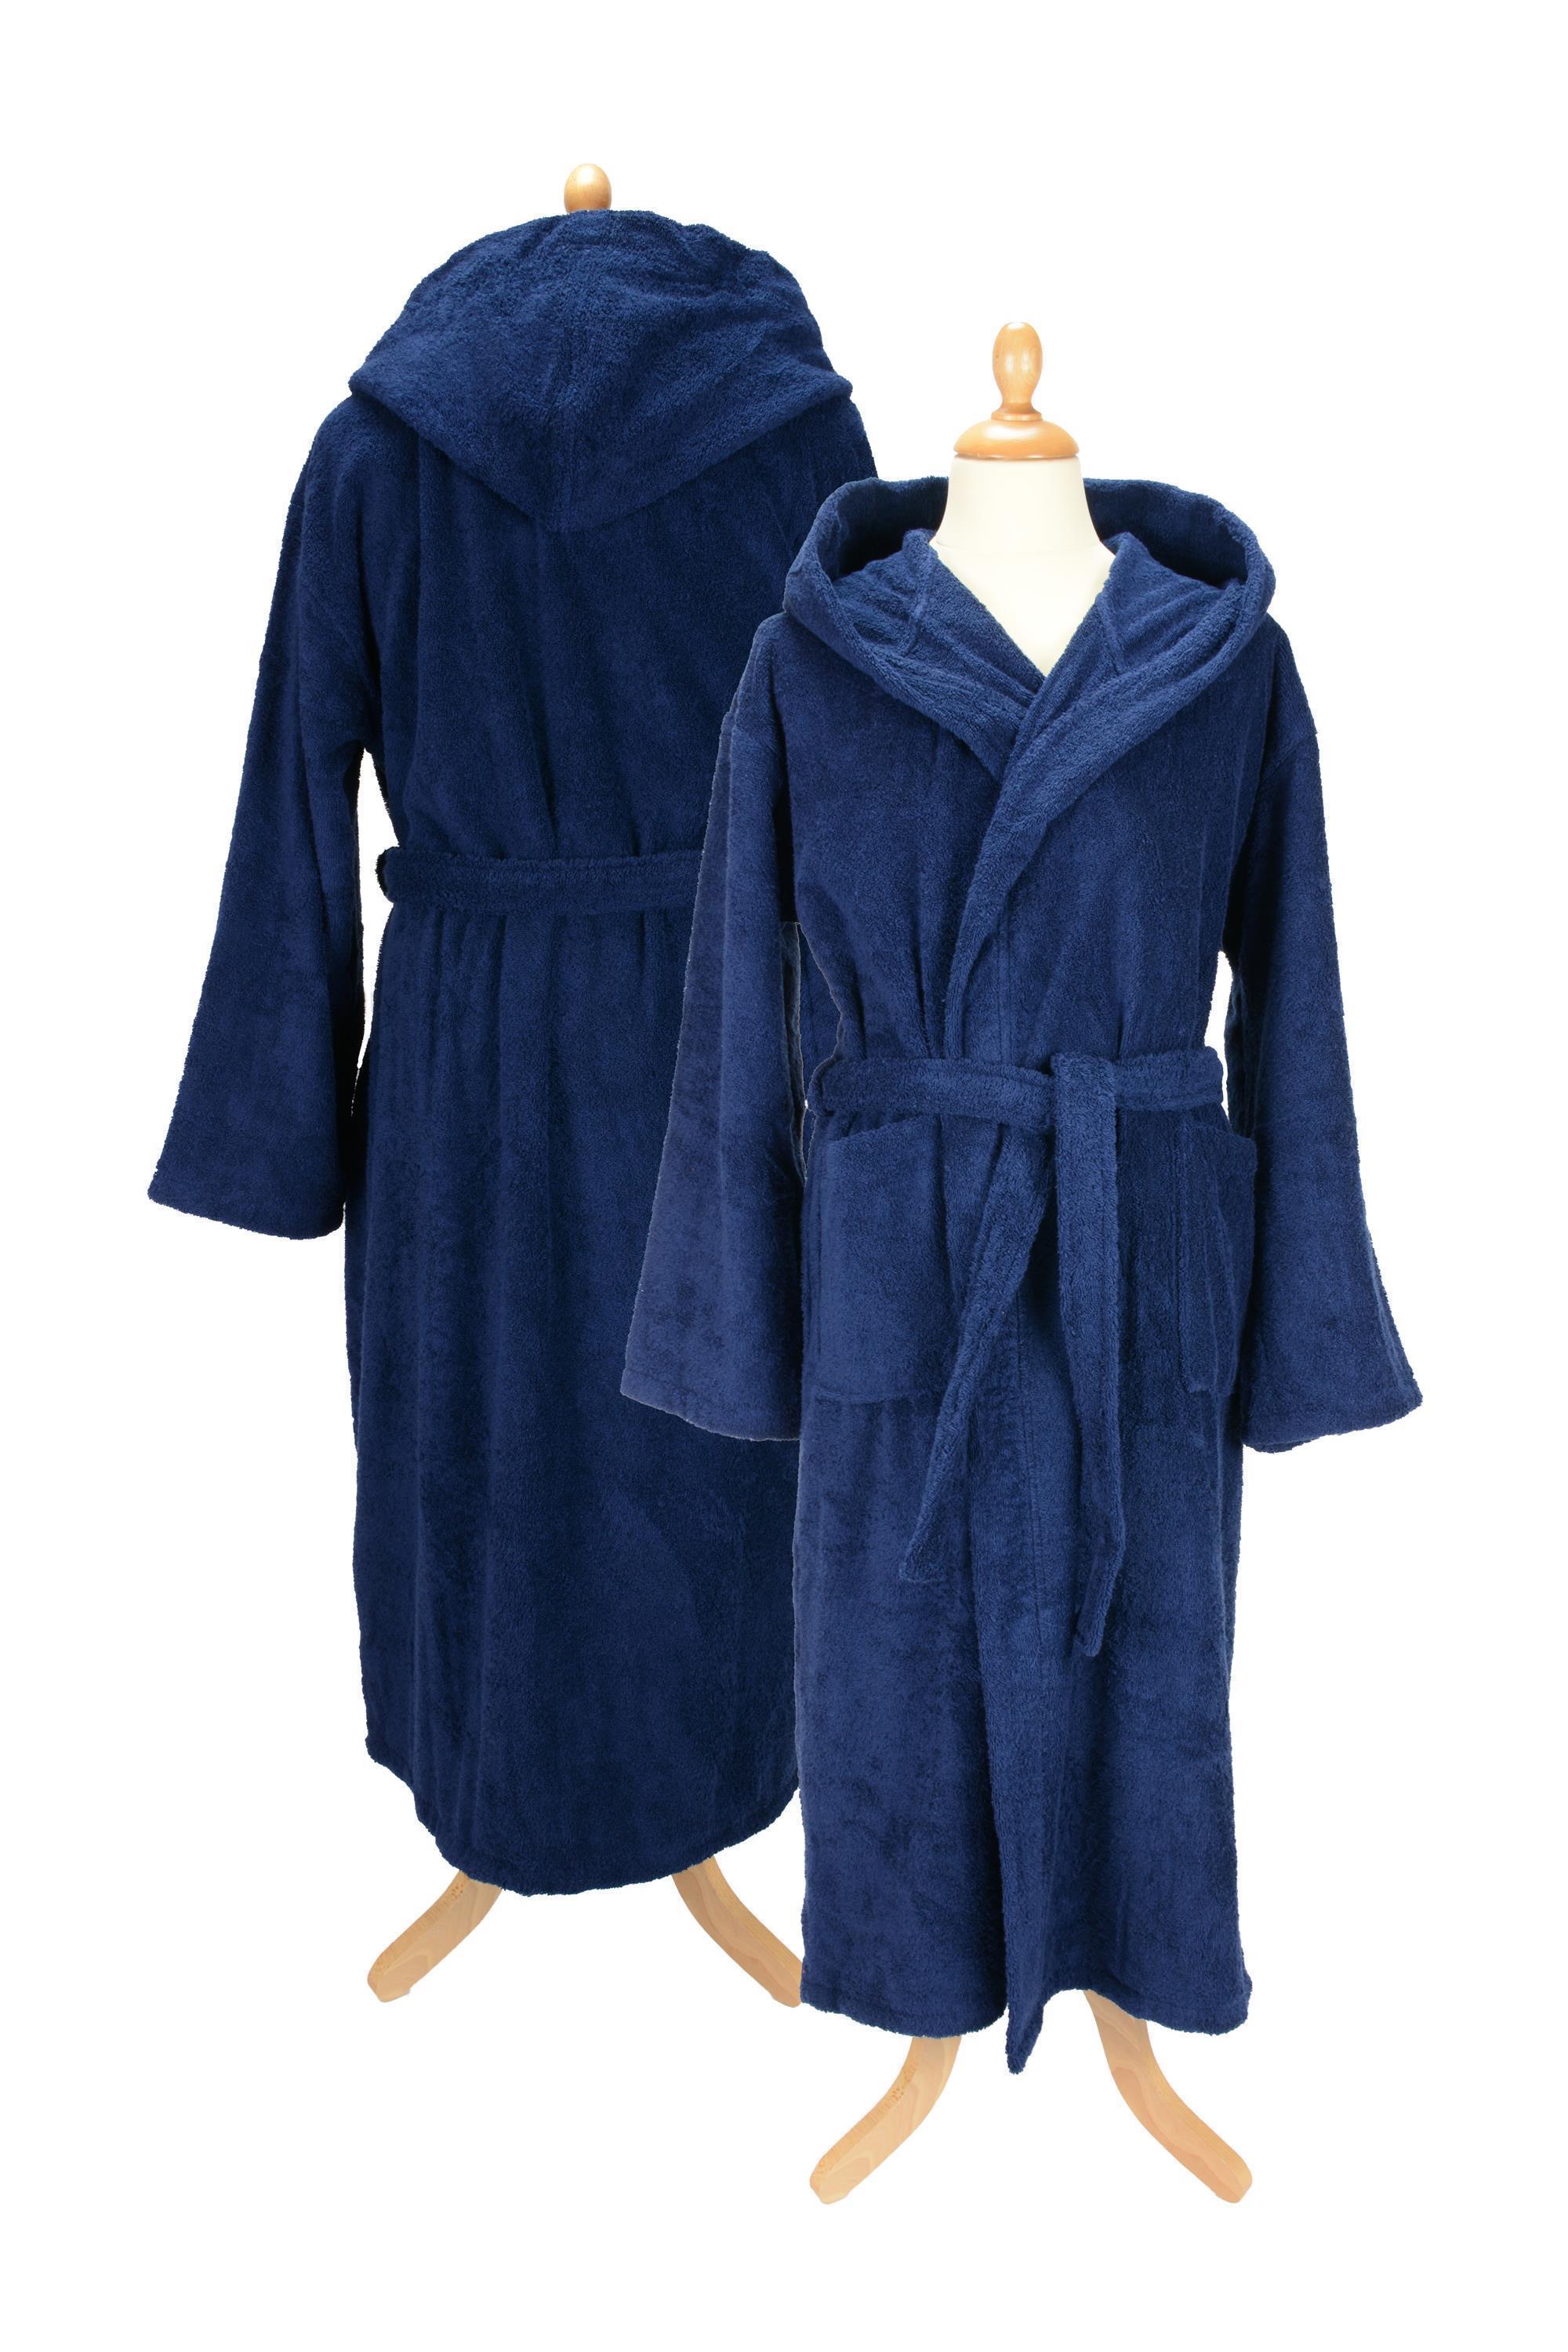 Unisex bathrobe with hood 400 g/m² A